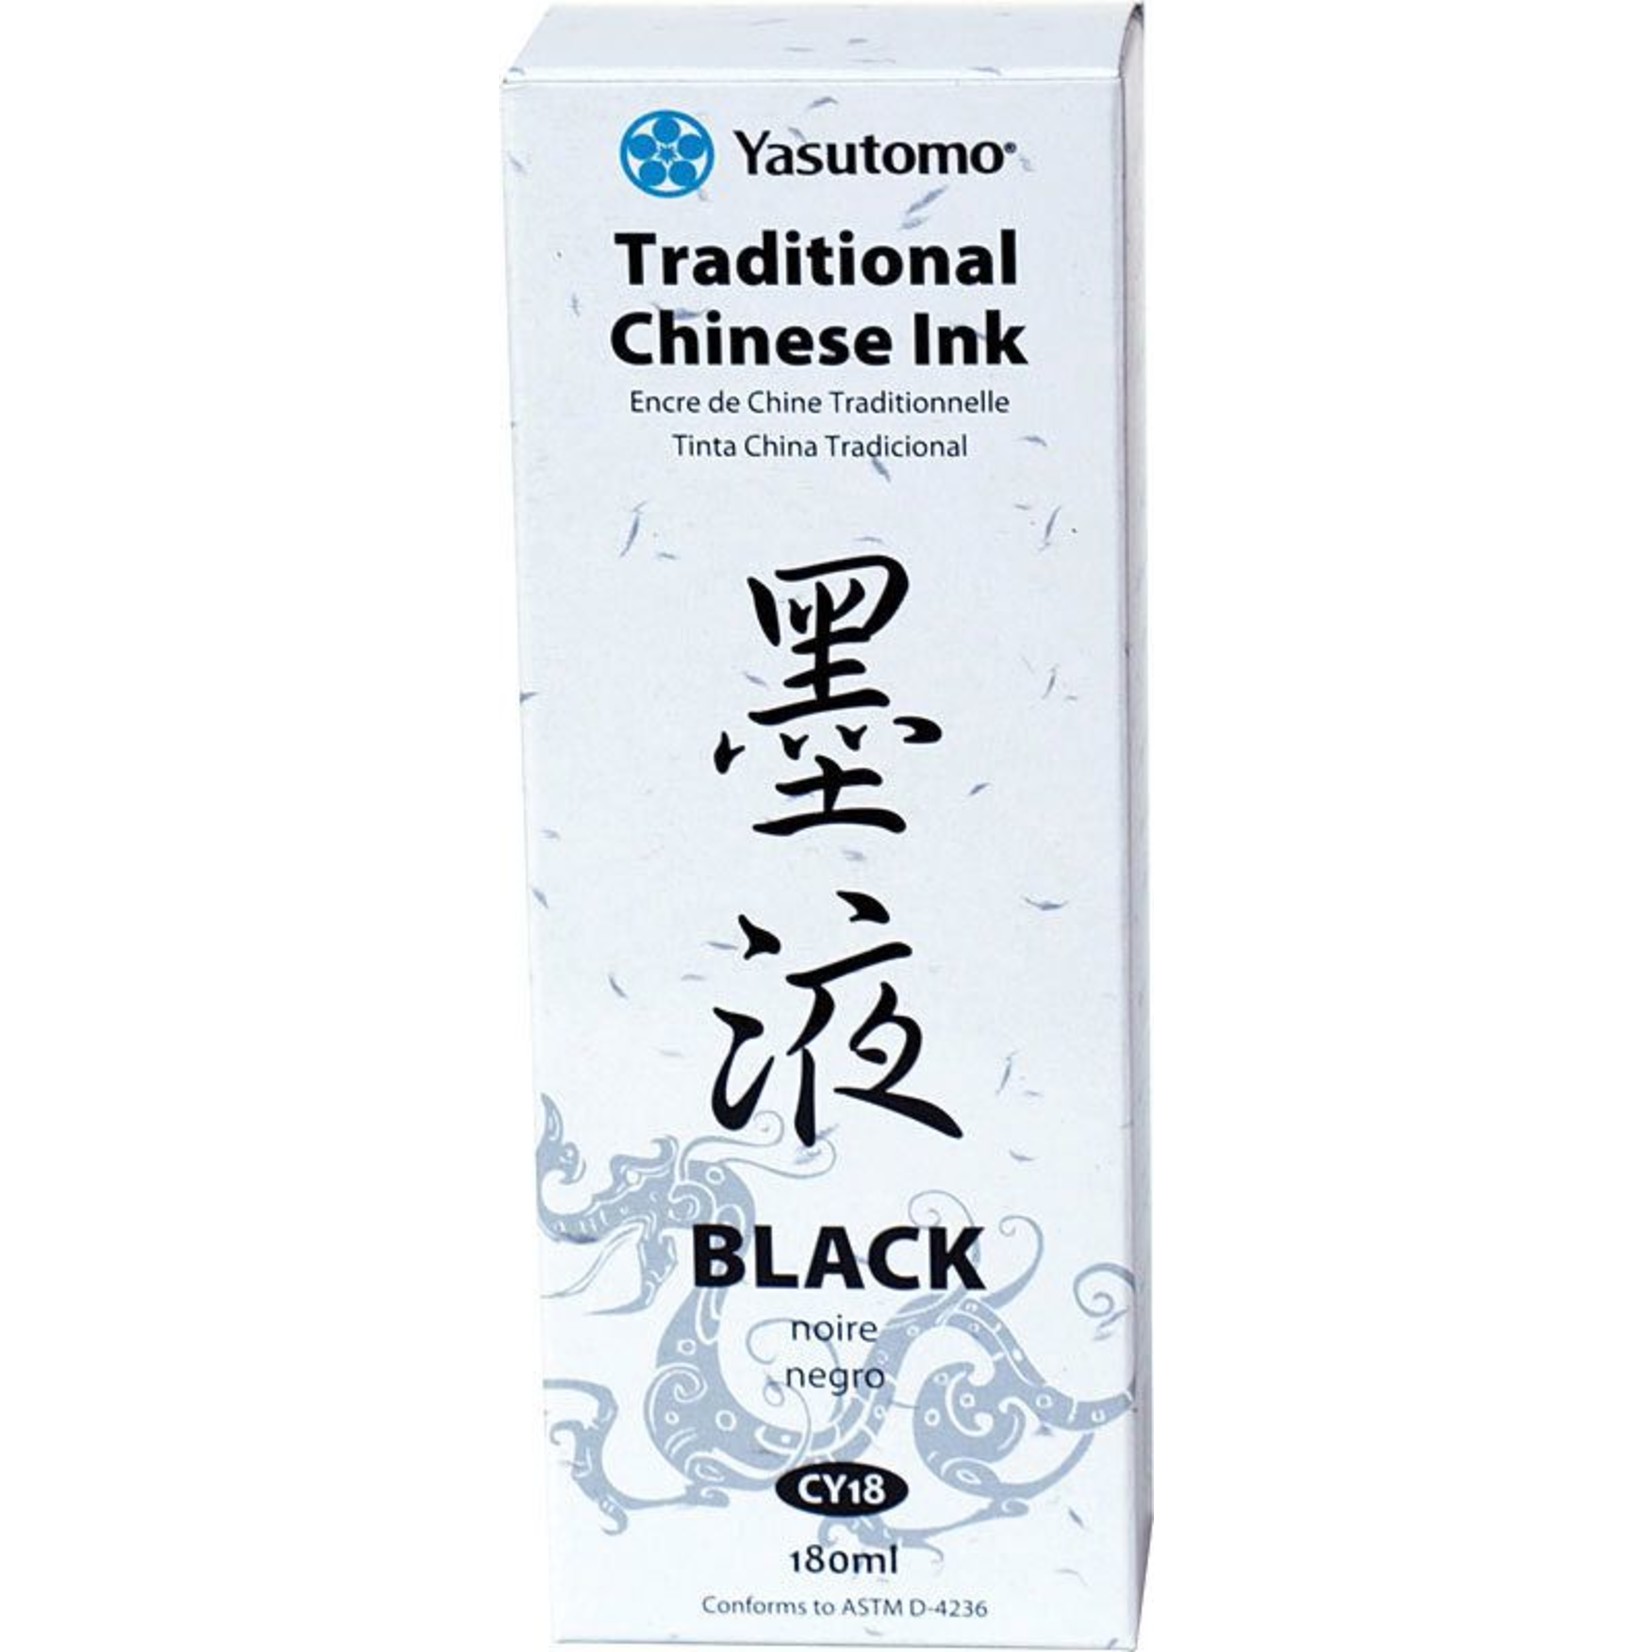 YASUTOMO YASUTOMO TRADITIONAL CHINESE INK- 180ml BLACK